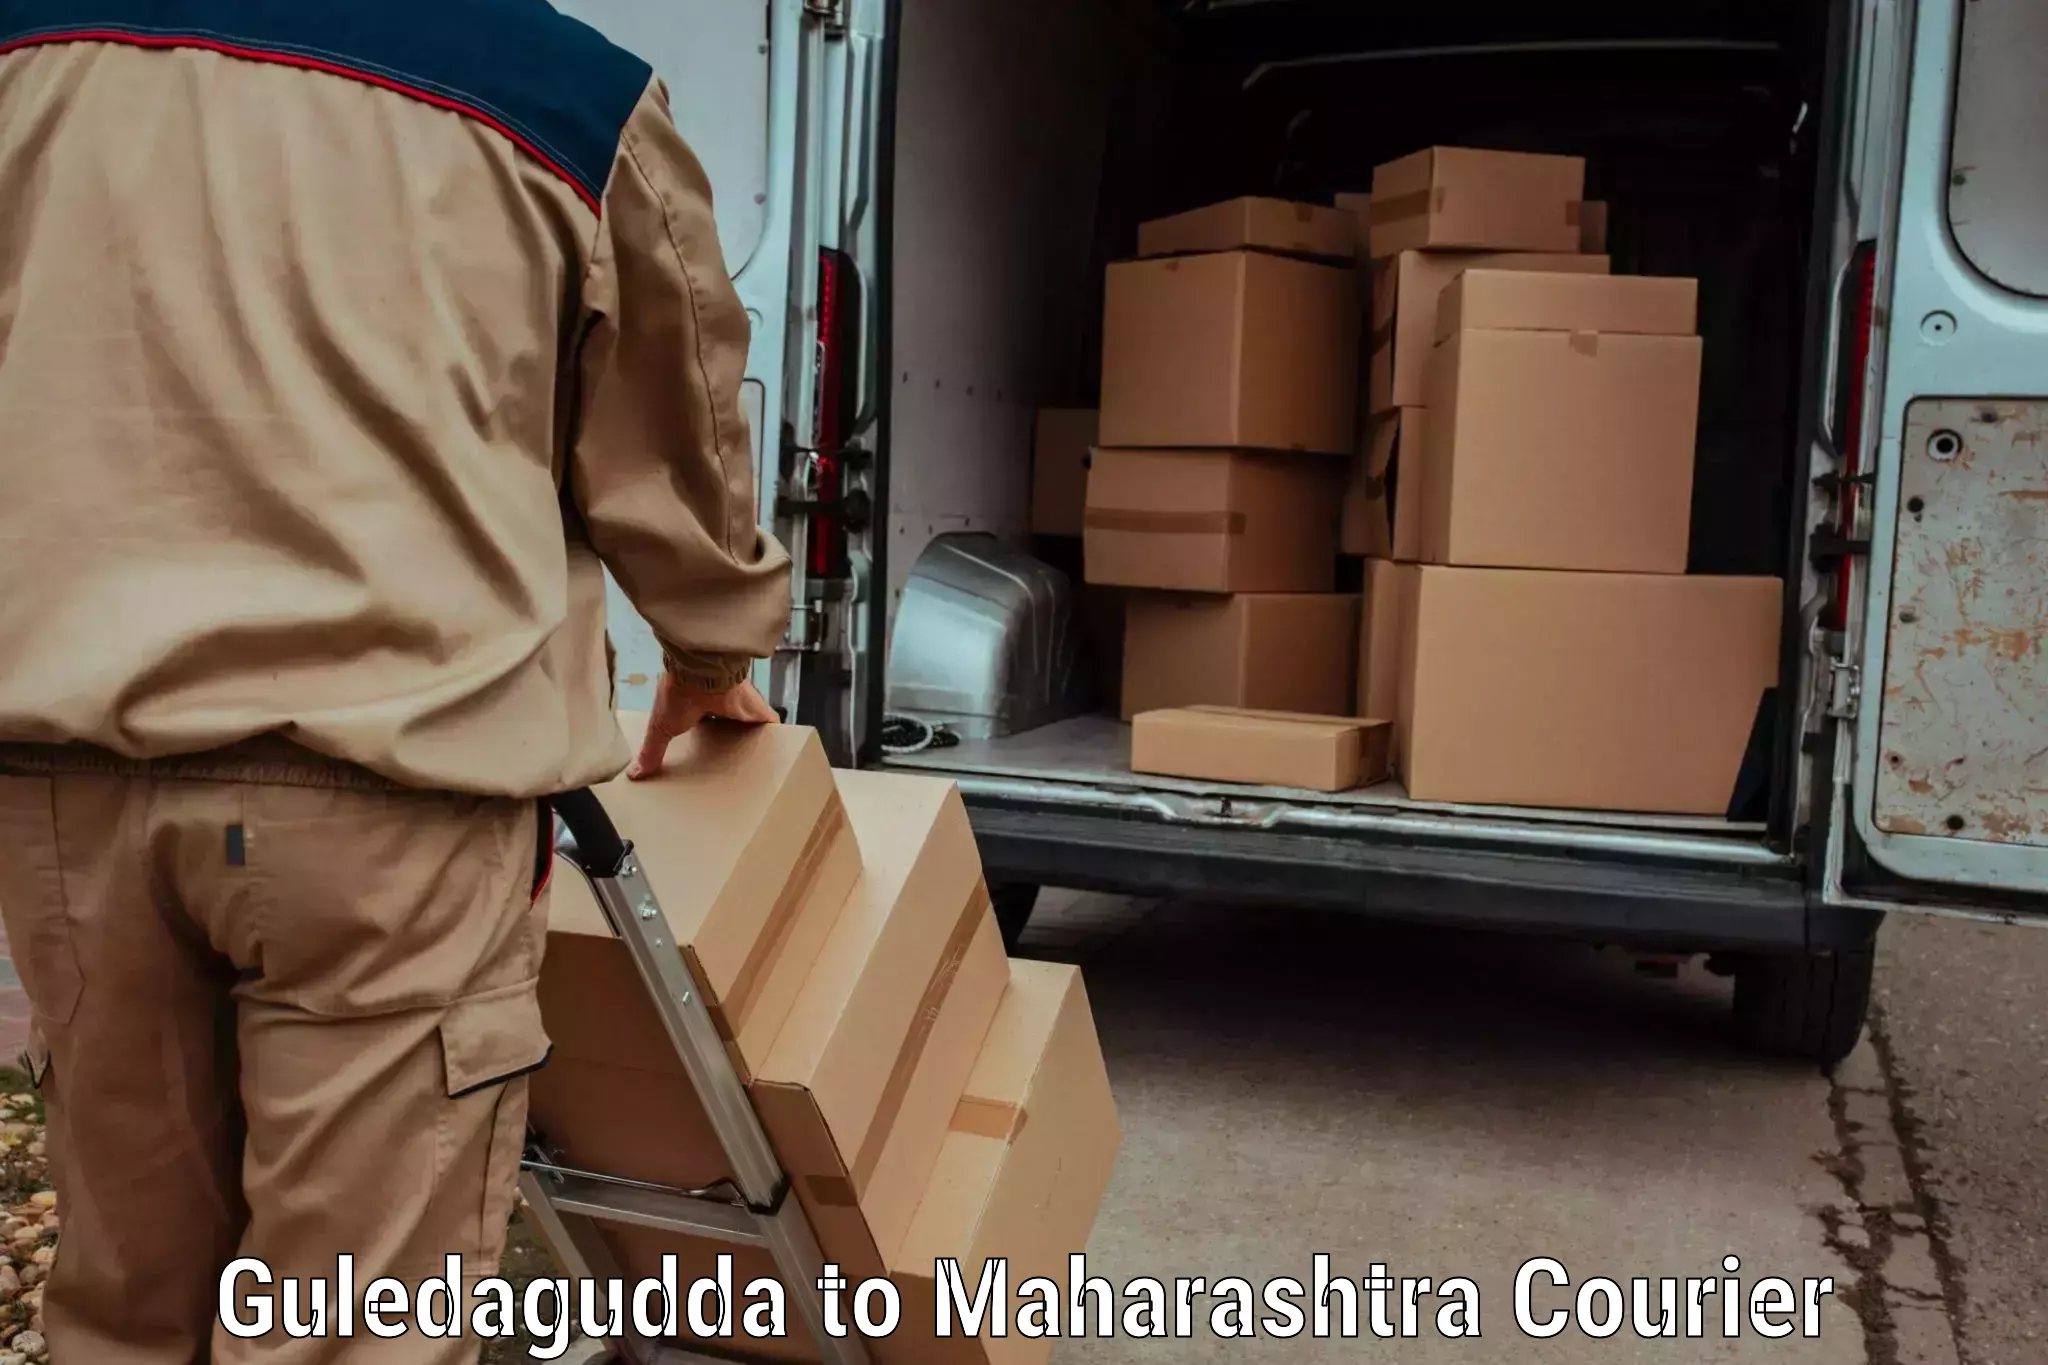 Cash on delivery service Guledagudda to Umarkhed